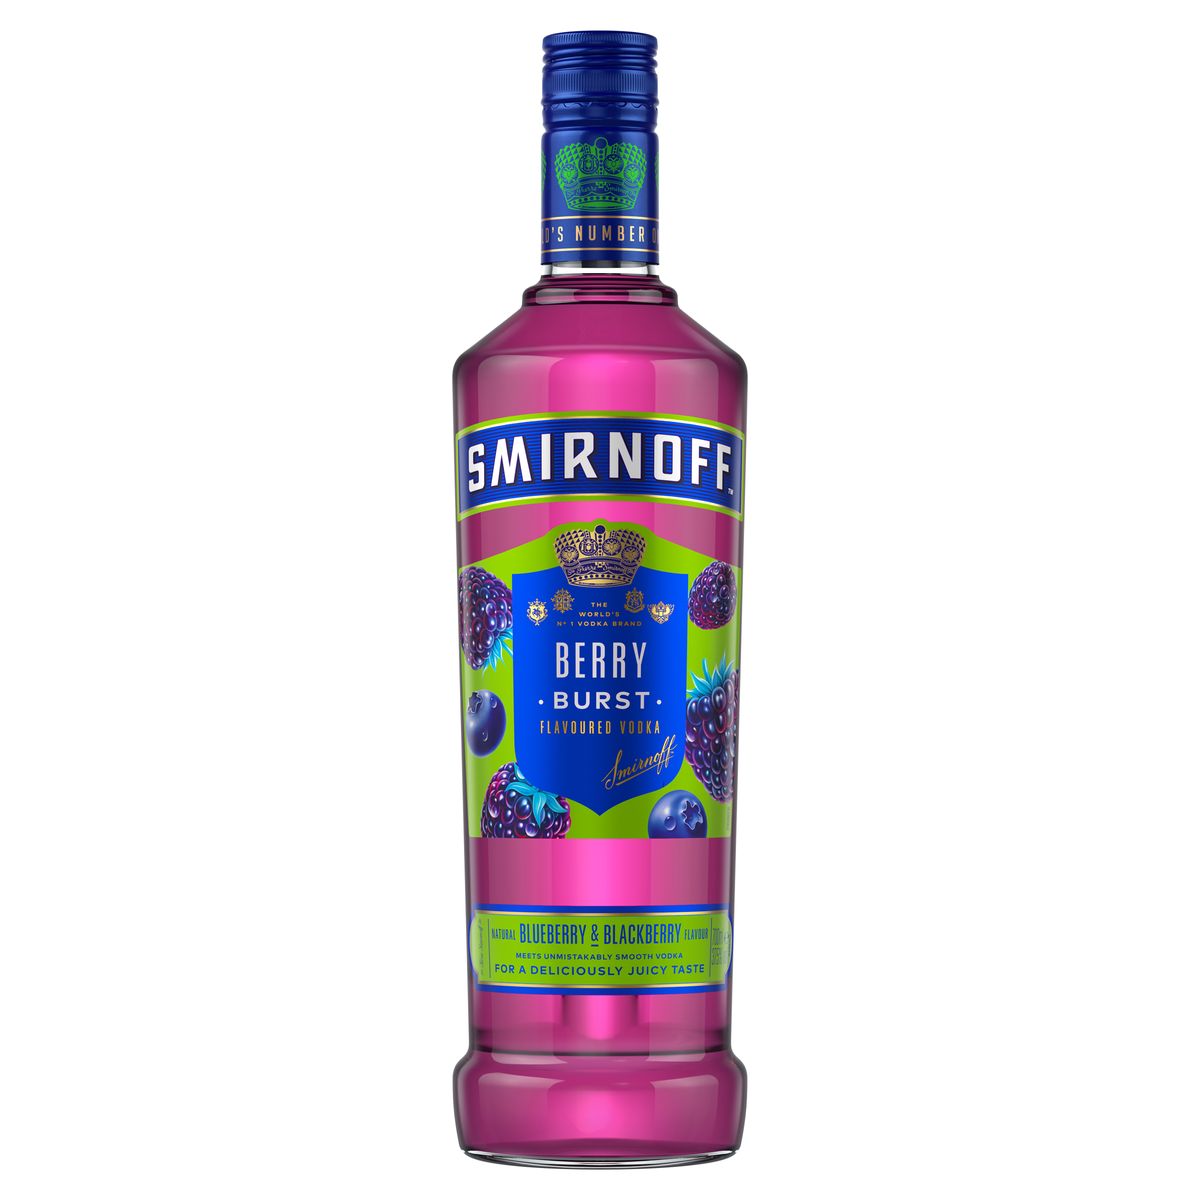 Smirnoff expands flavoured vodka range with new Berry Burst